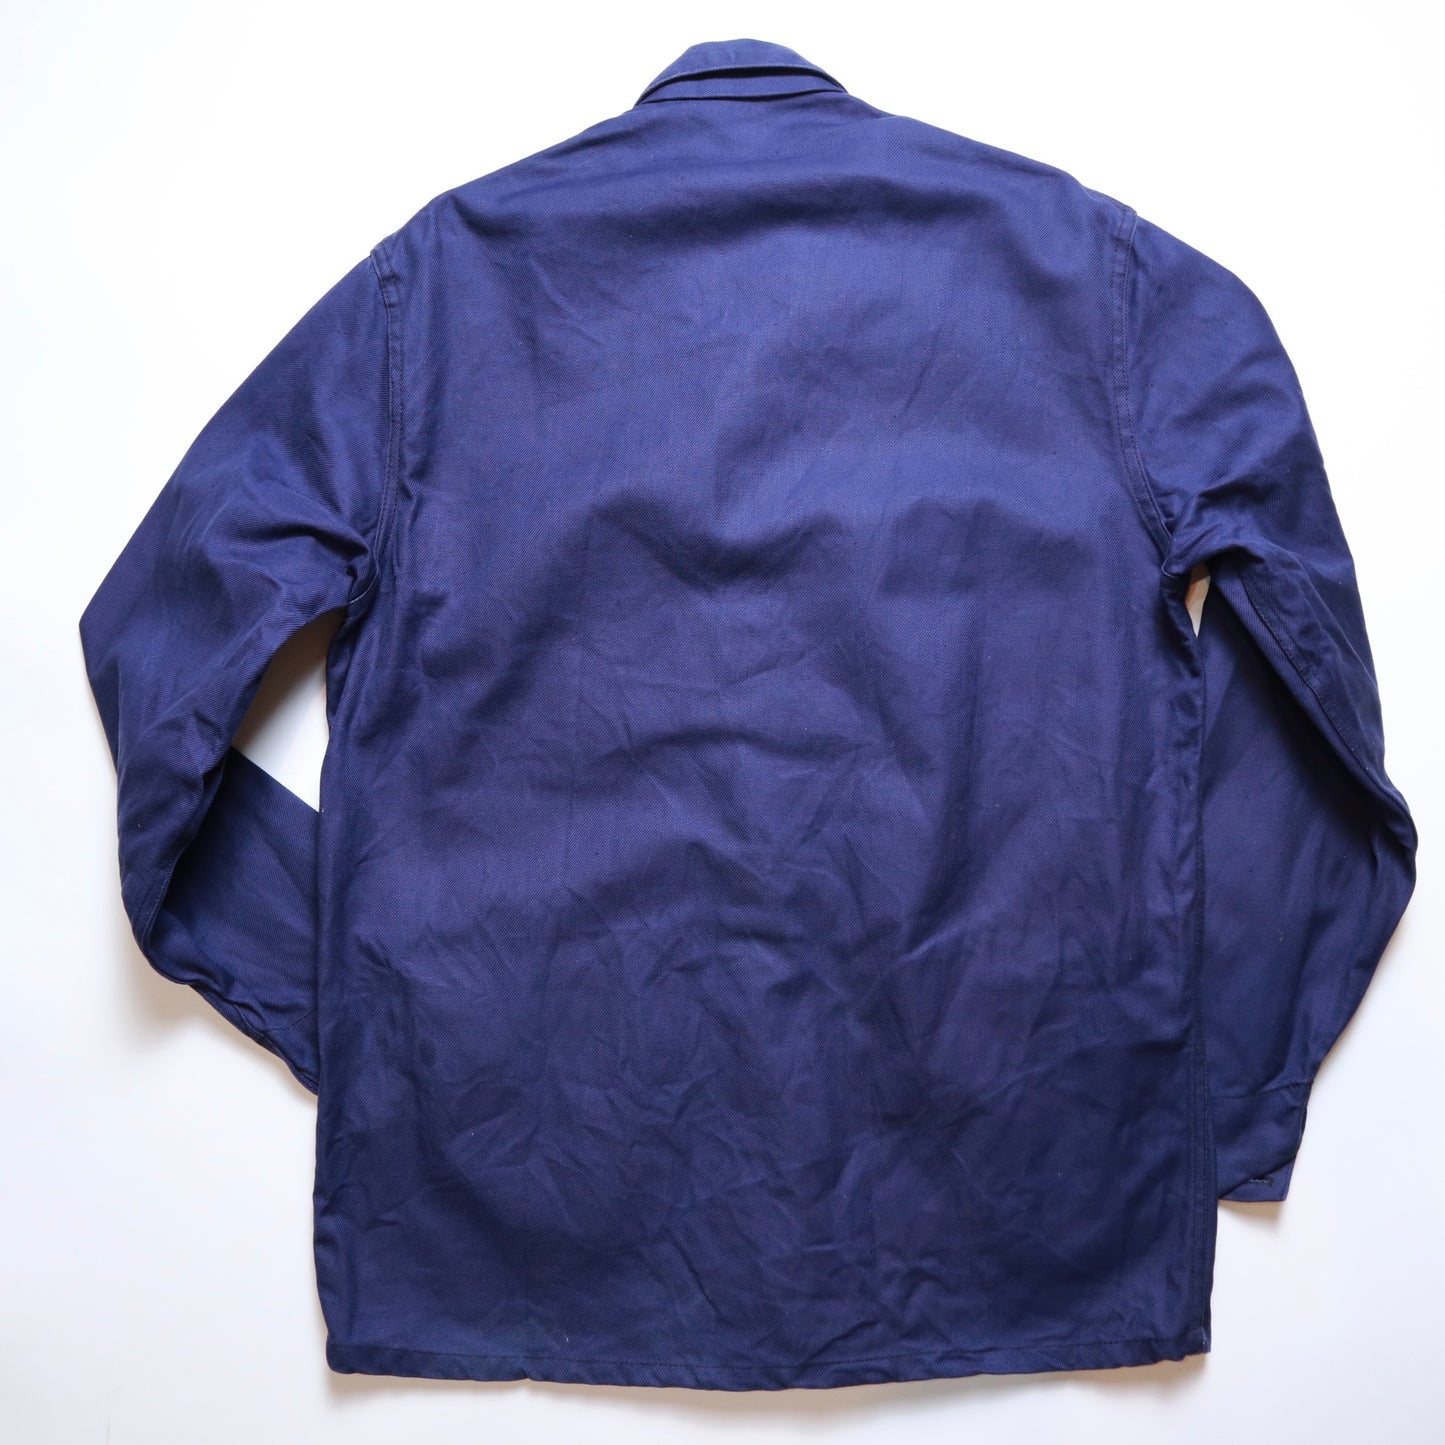 1970s 藍色法國工裝外套 French Work jacket 斜紋布料